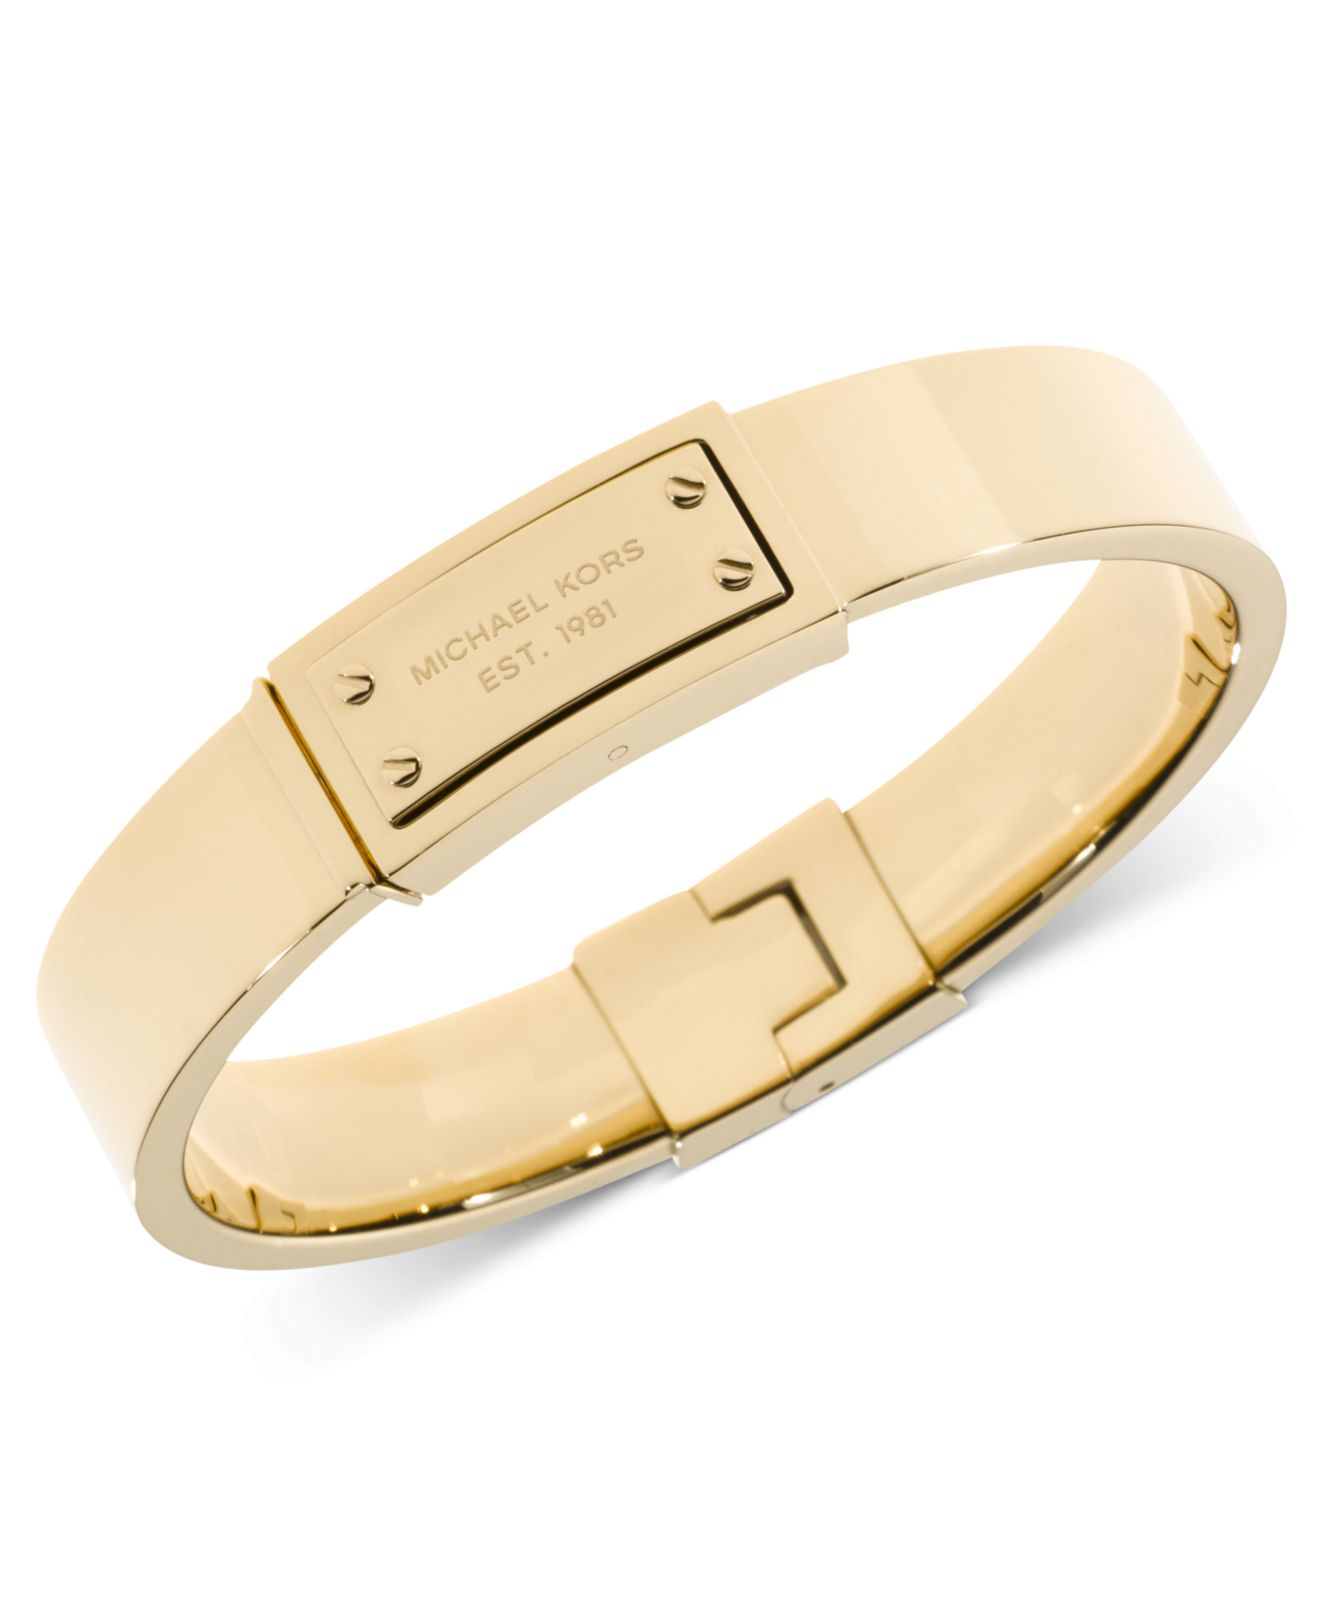 Michael Kors Gold-Tone Logo Plaque Bangle Bracelet in Metallic | Lyst